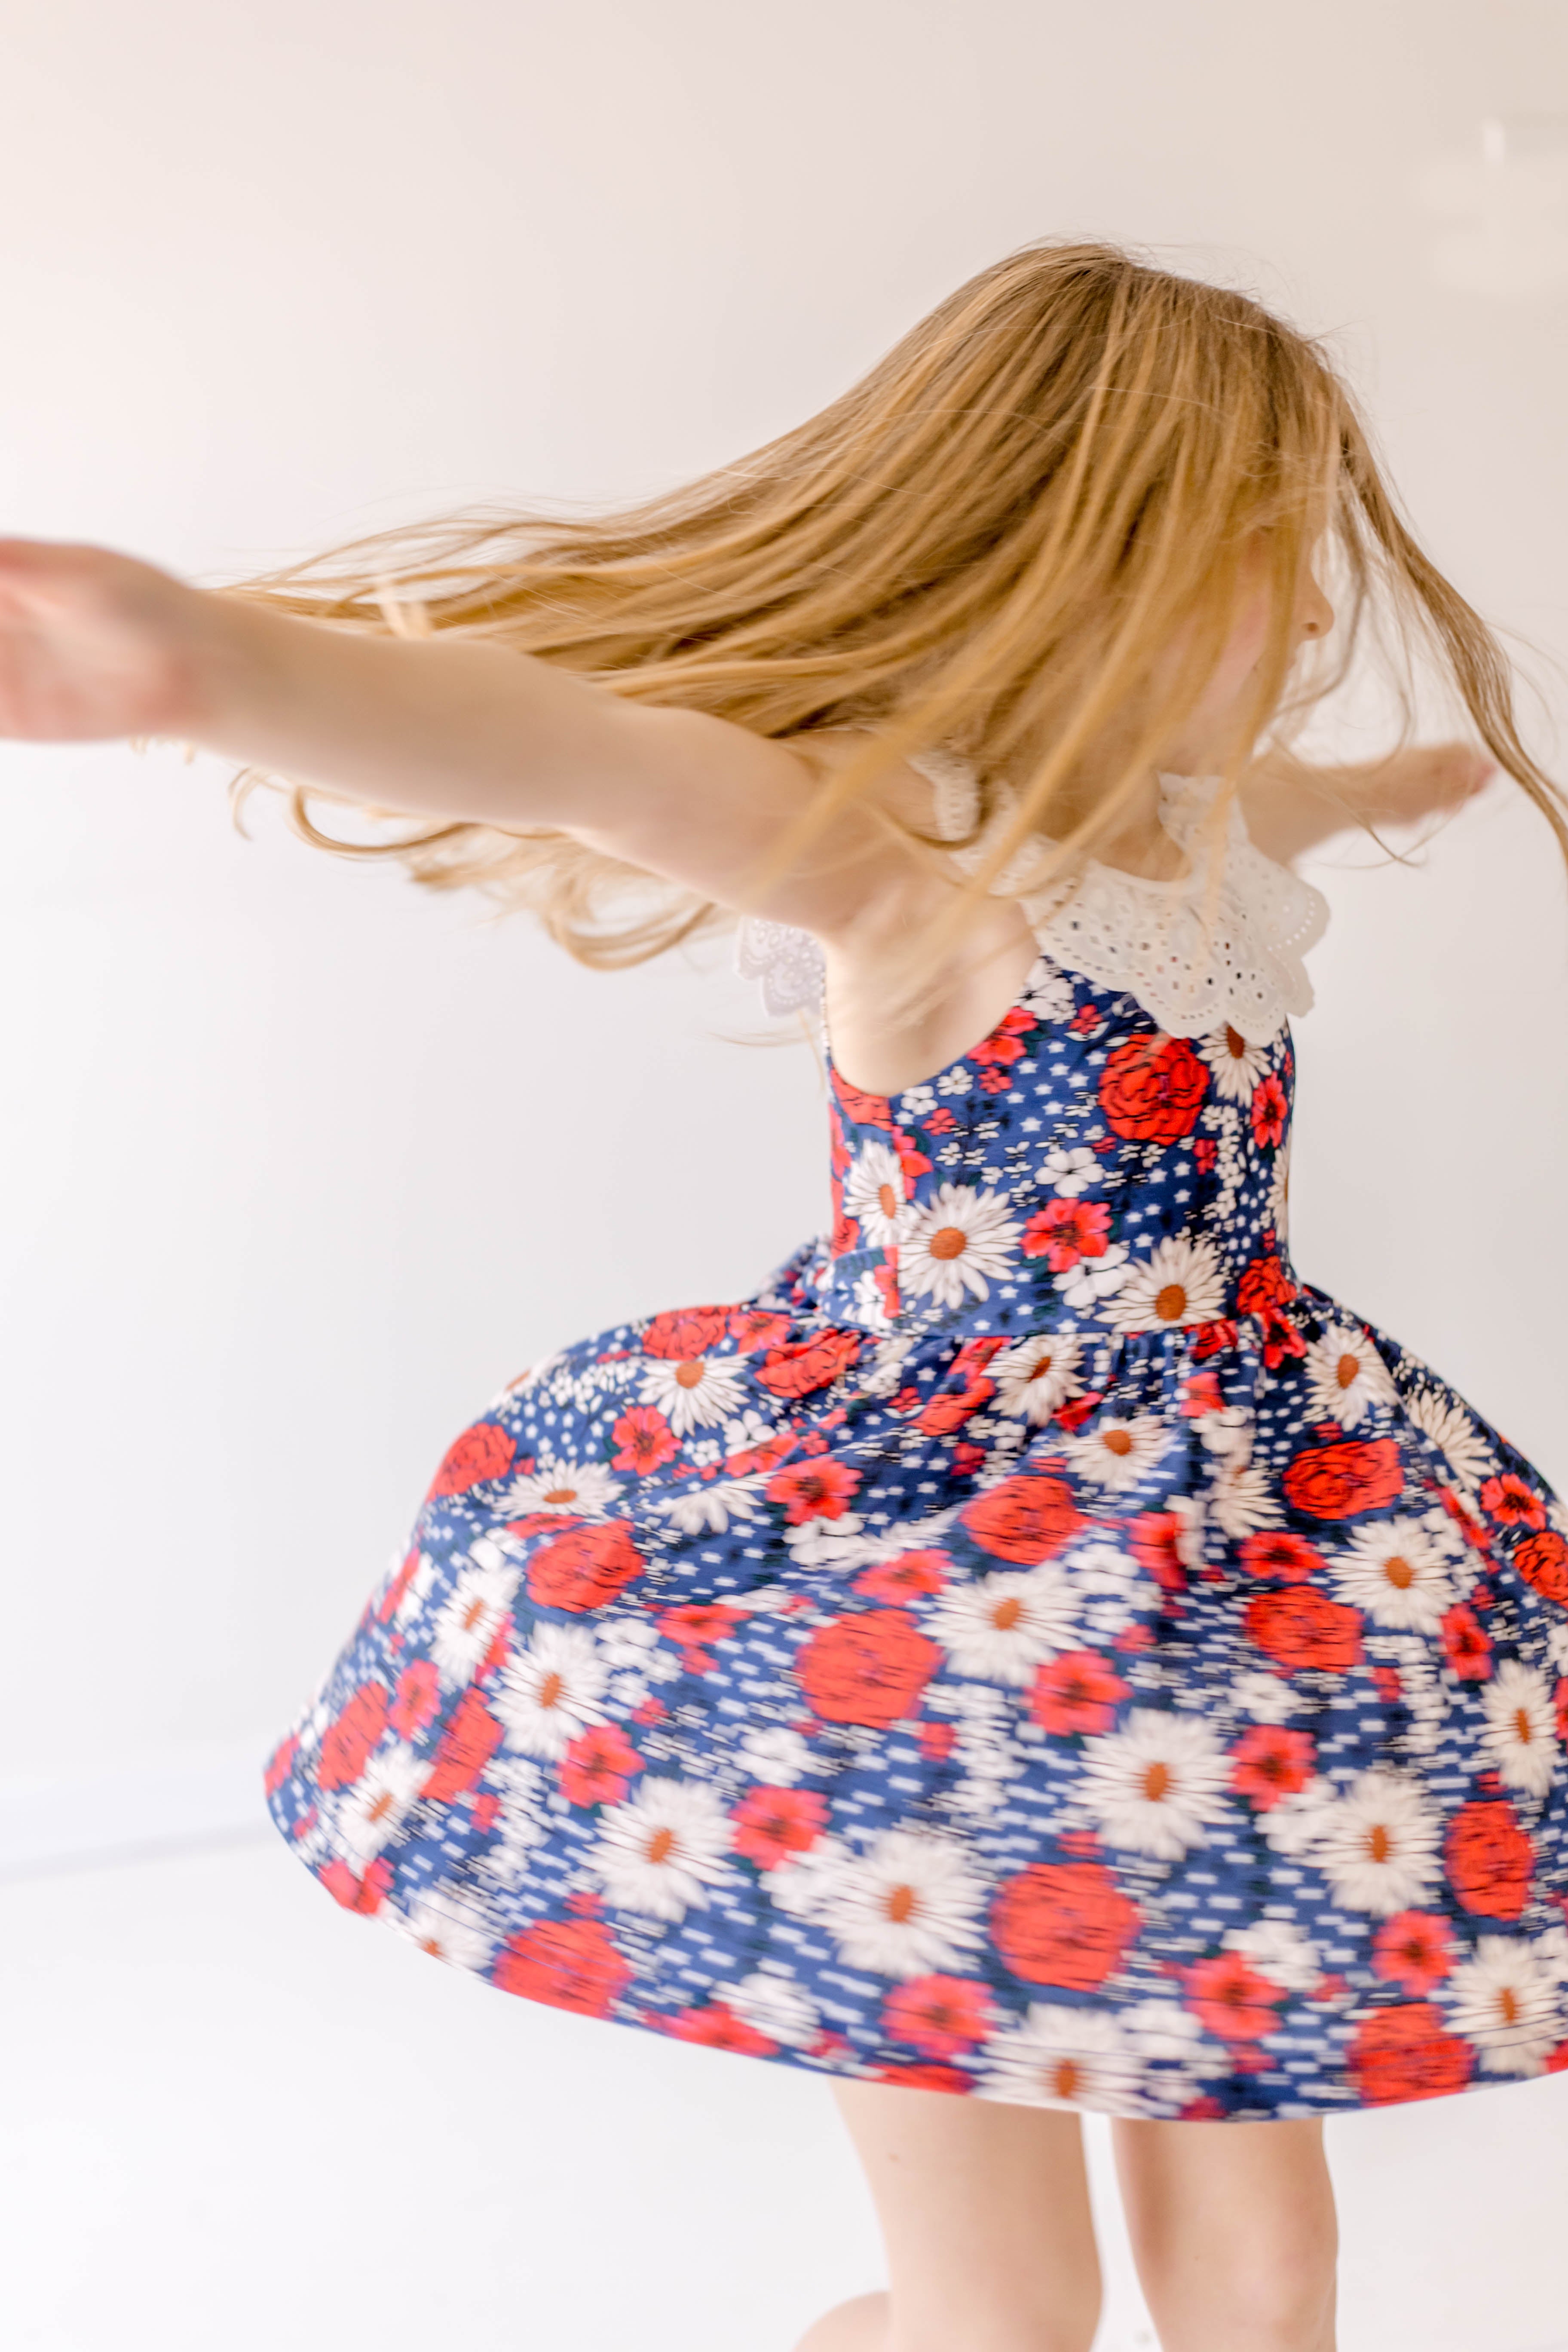 Penelope Knit Dress - All American